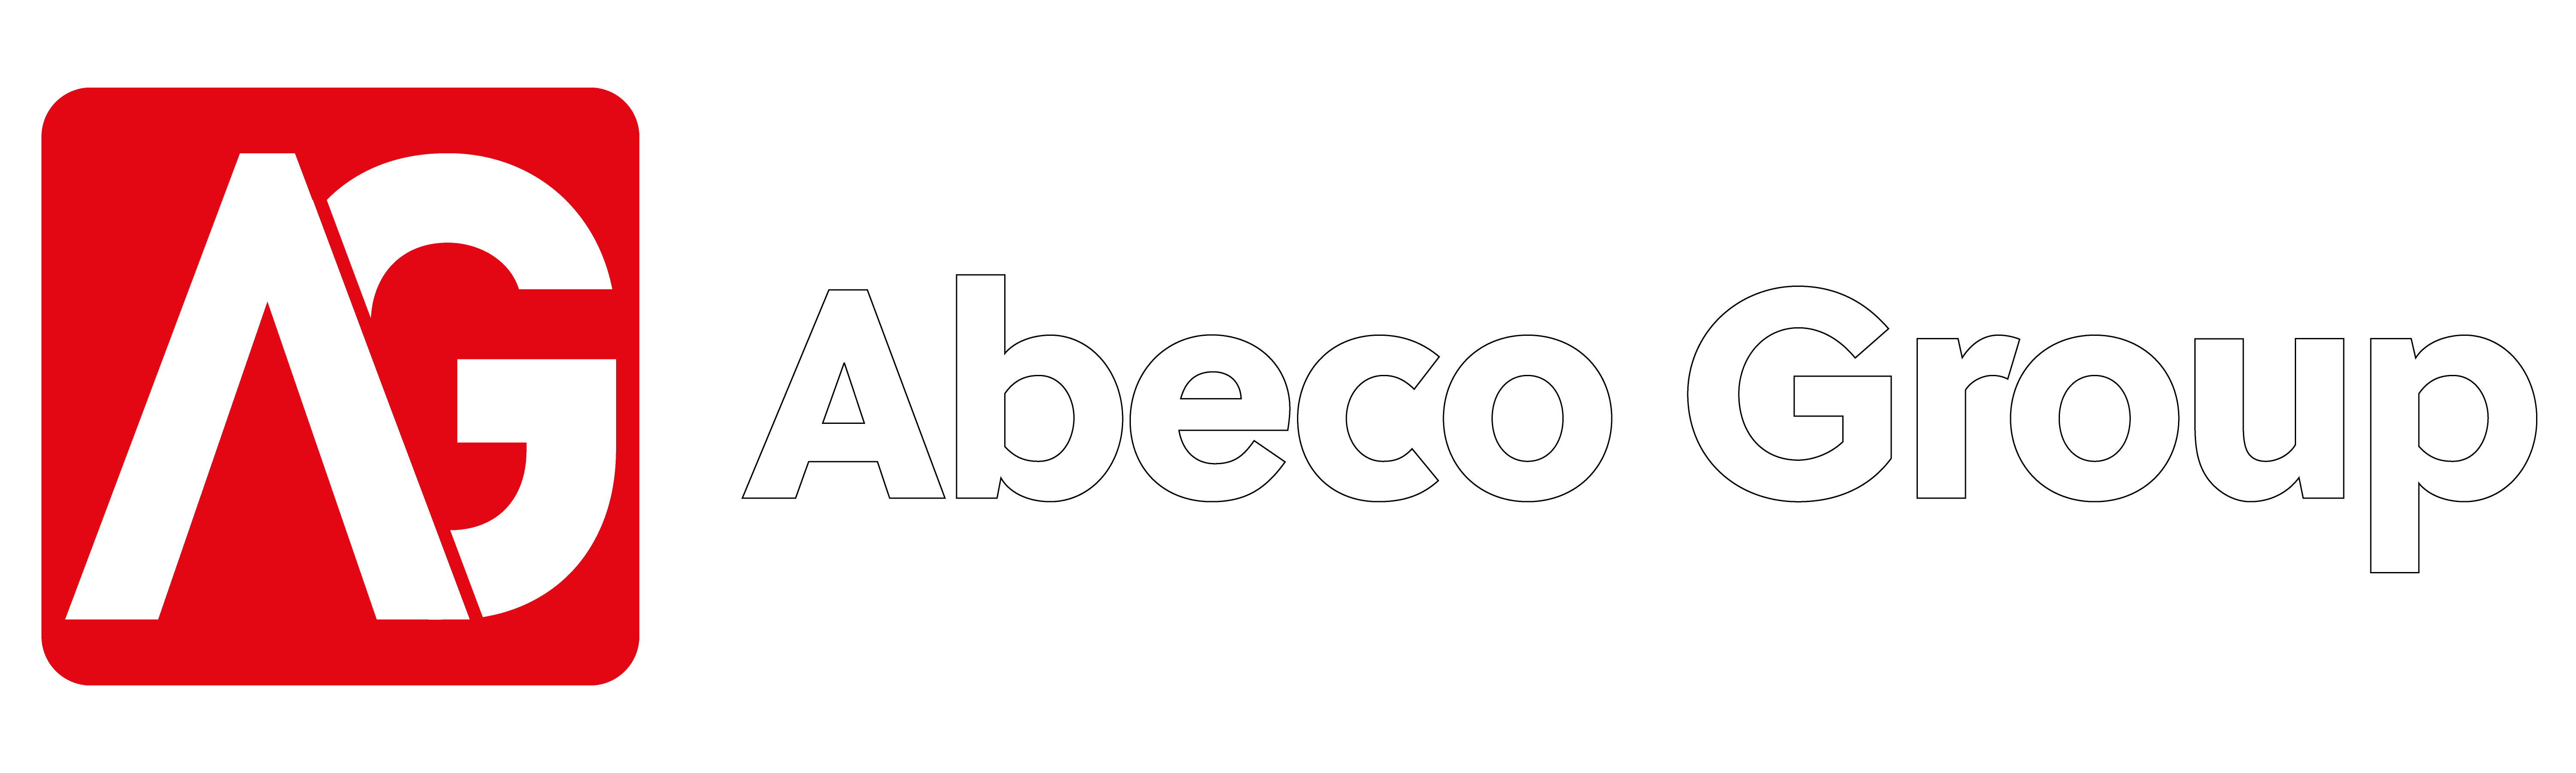 Abeco Group Logo